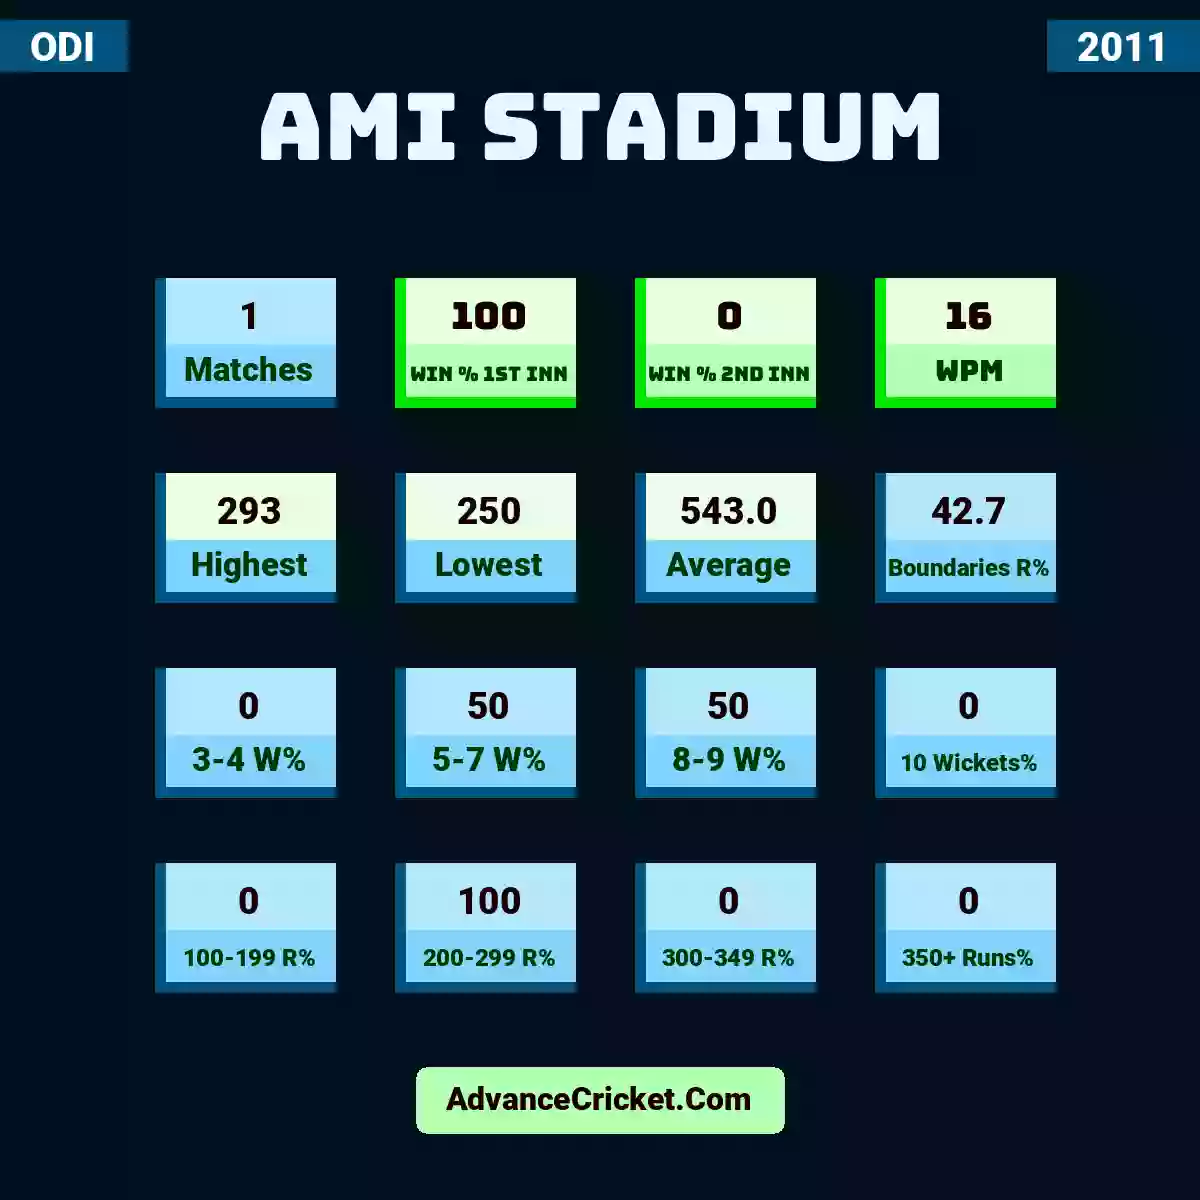 Image showing AMI Stadium with Matches: 1, Win % 1st Inn: 100, Win % 2nd Inn: 0, WPM: 16, Highest: 293, Lowest: 250, Average: 543.0, Boundaries R%: 42.7, 3-4 W%: 0, 5-7 W%: 50, 8-9 W%: 50, 10 Wickets%: 0, 100-199 R%: 0, 200-299 R%: 100, 300-349 R%: 0, 350+ Runs%: 0.